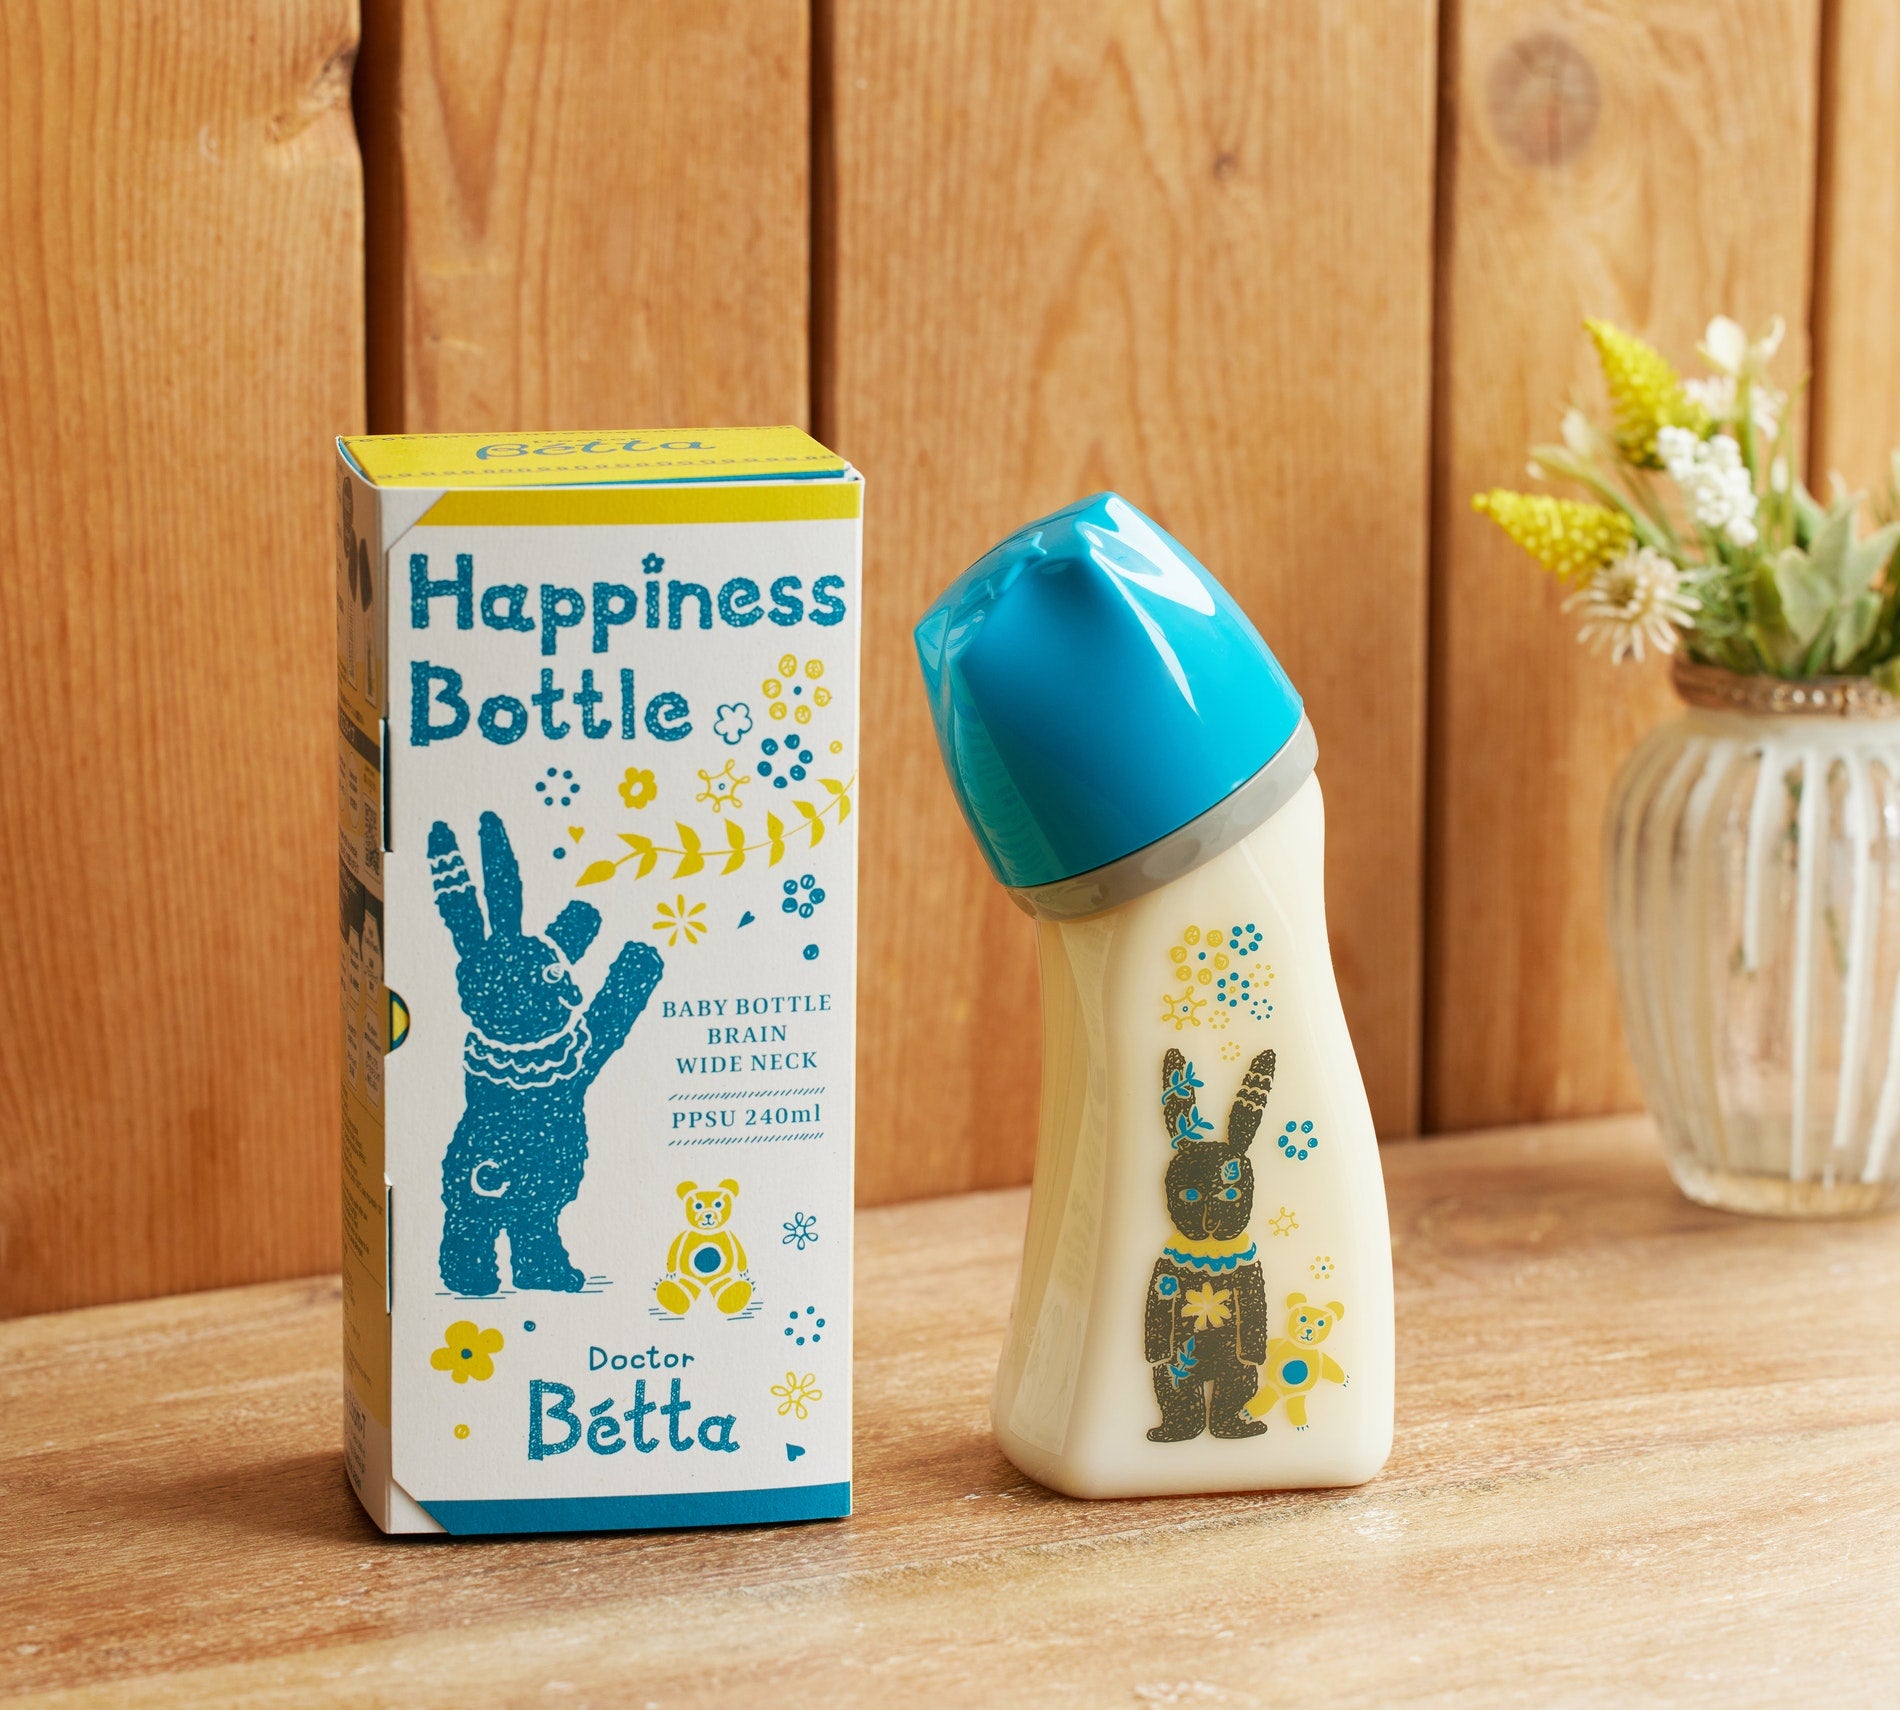 Doctor Bétta baby bottle【 Brain Wide Neck 】 Happiness Bottle 240ml